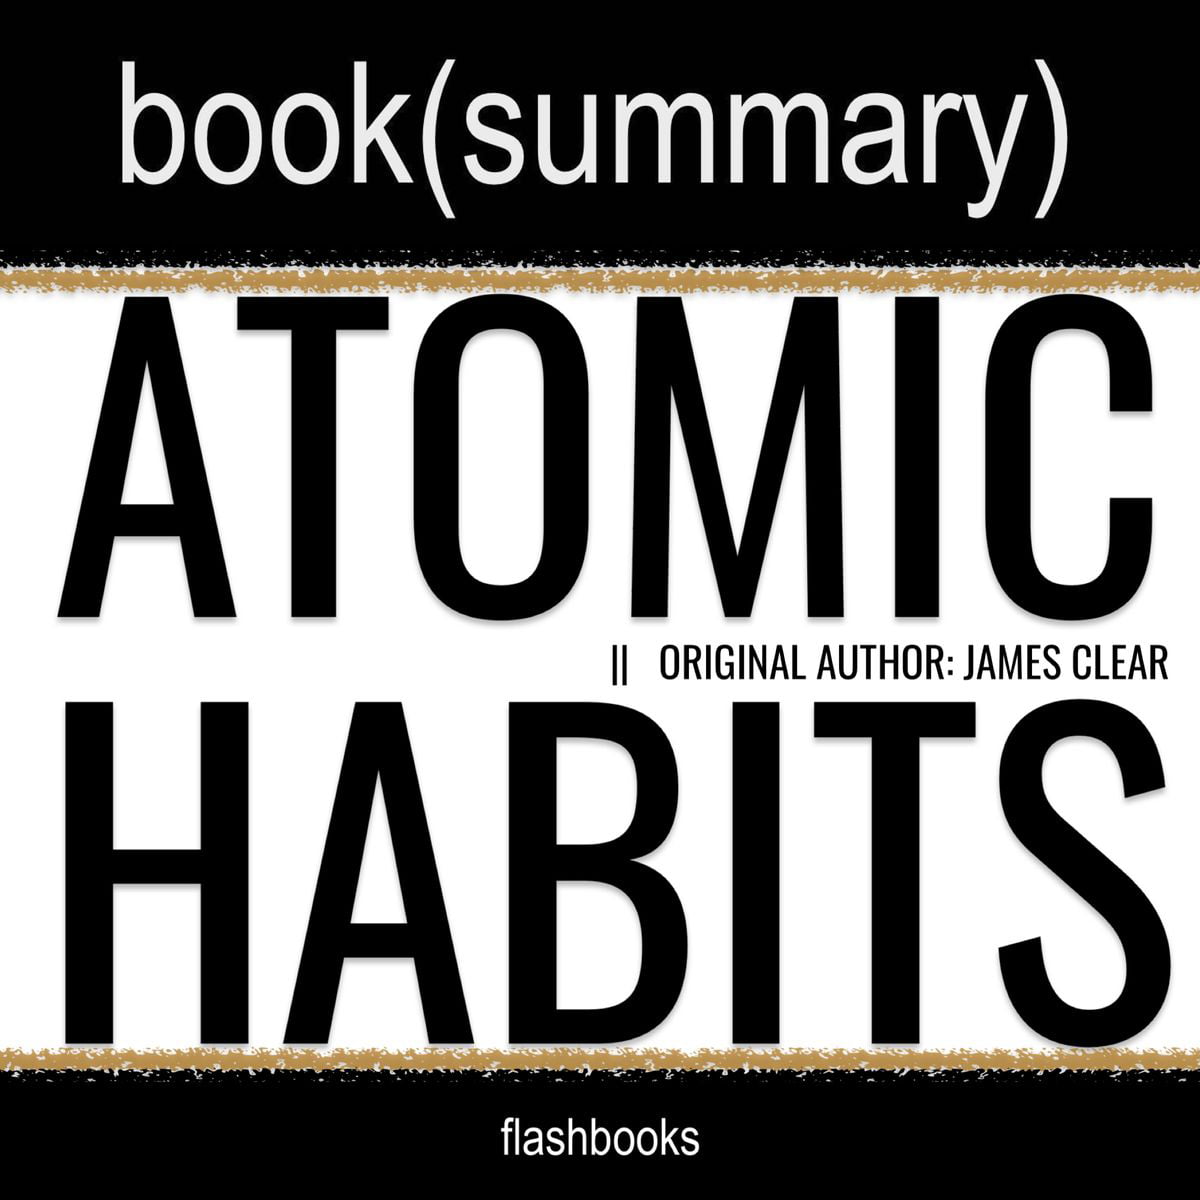 atomic habits audiobook youtube